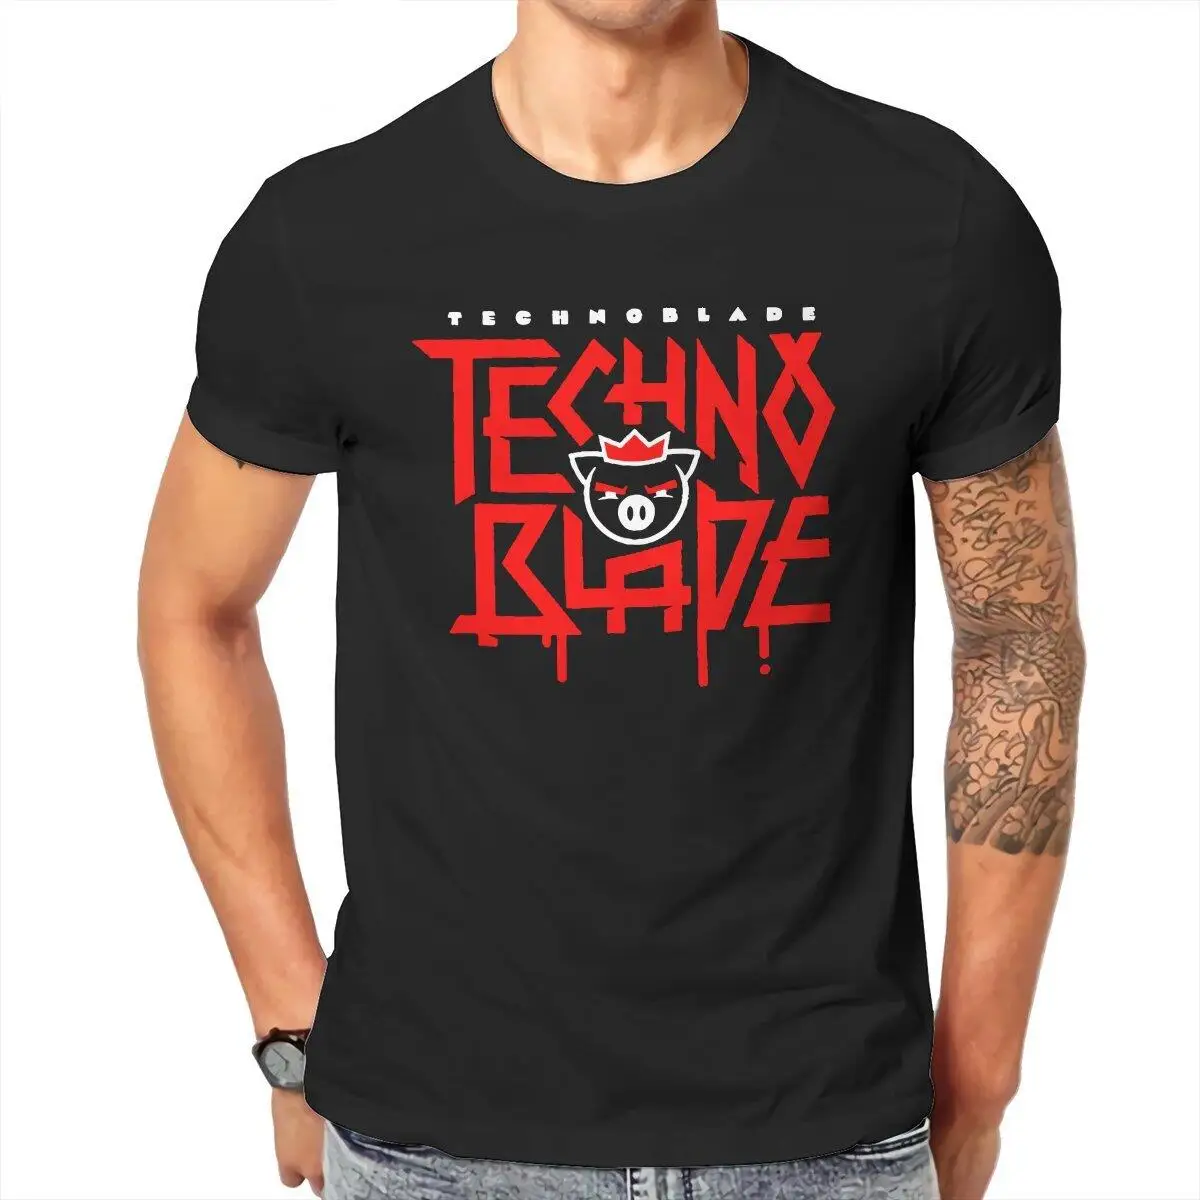 Technoblade Logo  T-Shirt Men Game Gamer Hipster 100% Cotton Tee Shirt Round Neck Short Sleeve T Shirt Graphic Printed Tops